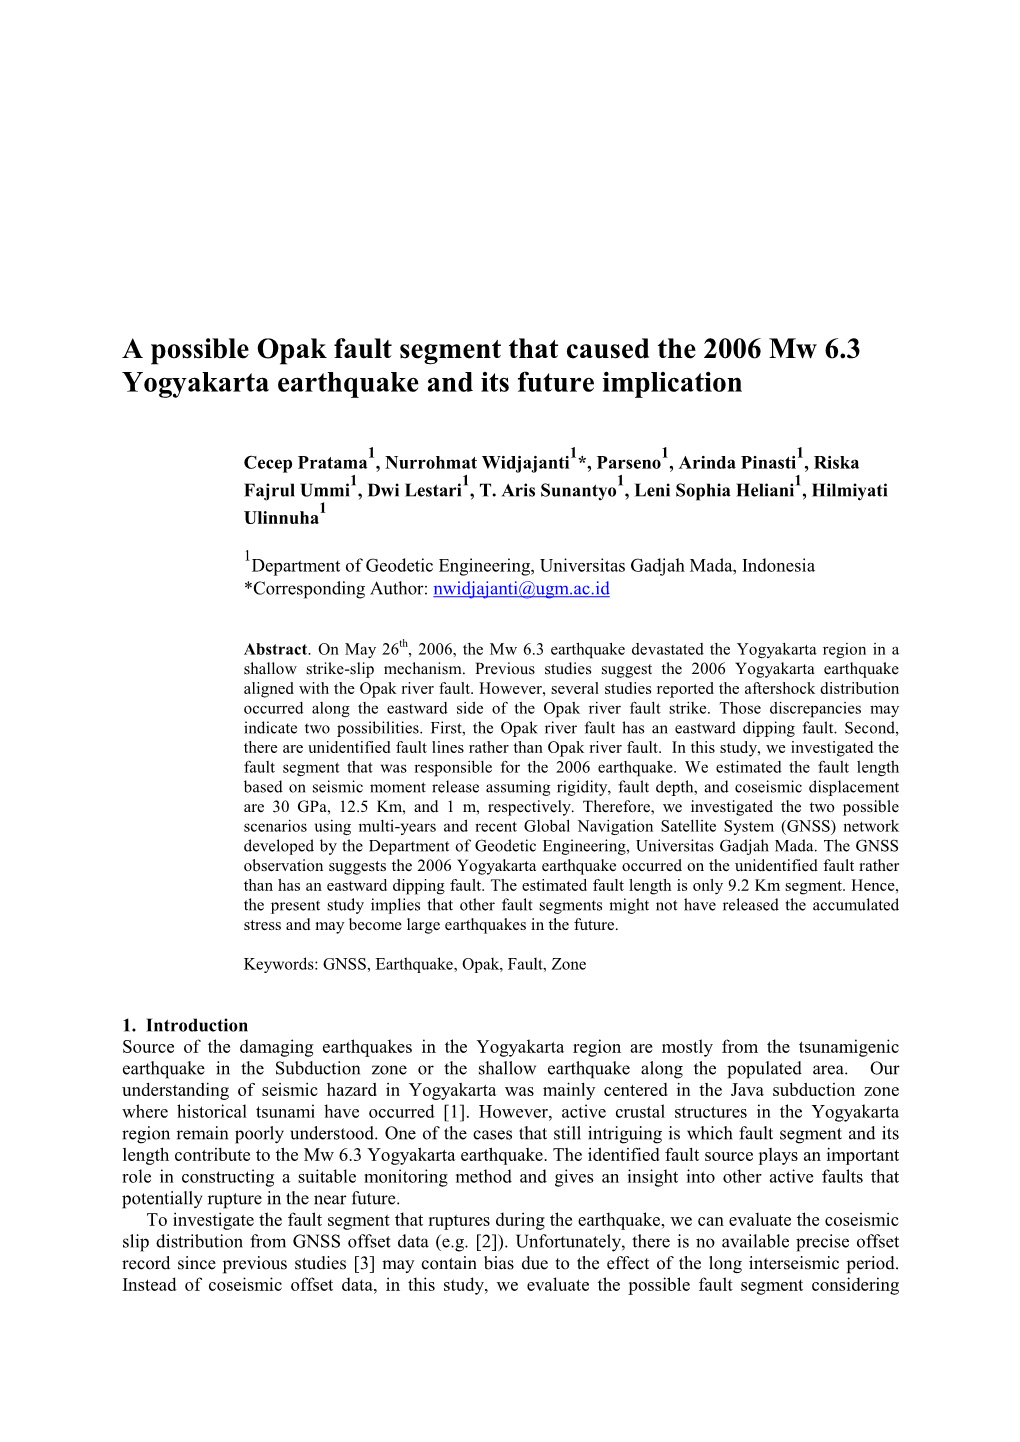 A Possible Opak Fault Segment That Caused the 2006 Mw 6.3 Yogyakarta Earthquake and Its Future Implication